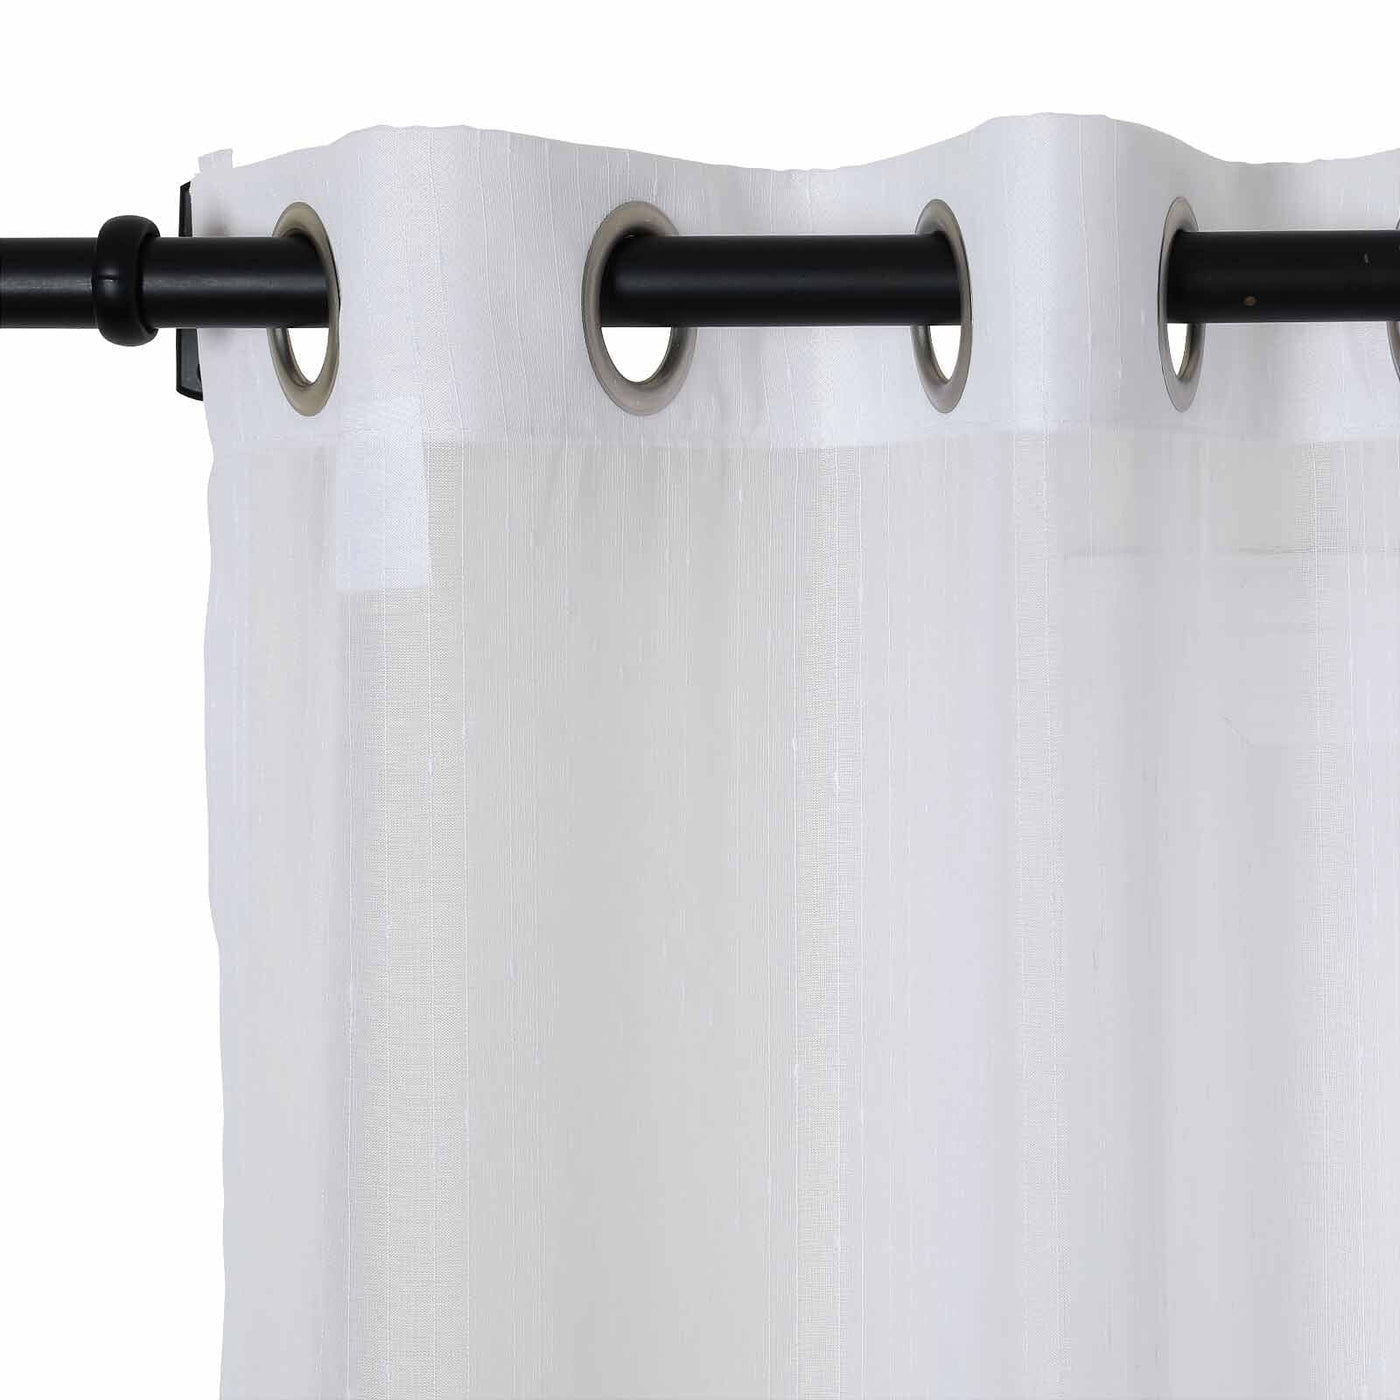 Florida Embossed White Semi Sheer Curtain Grommet